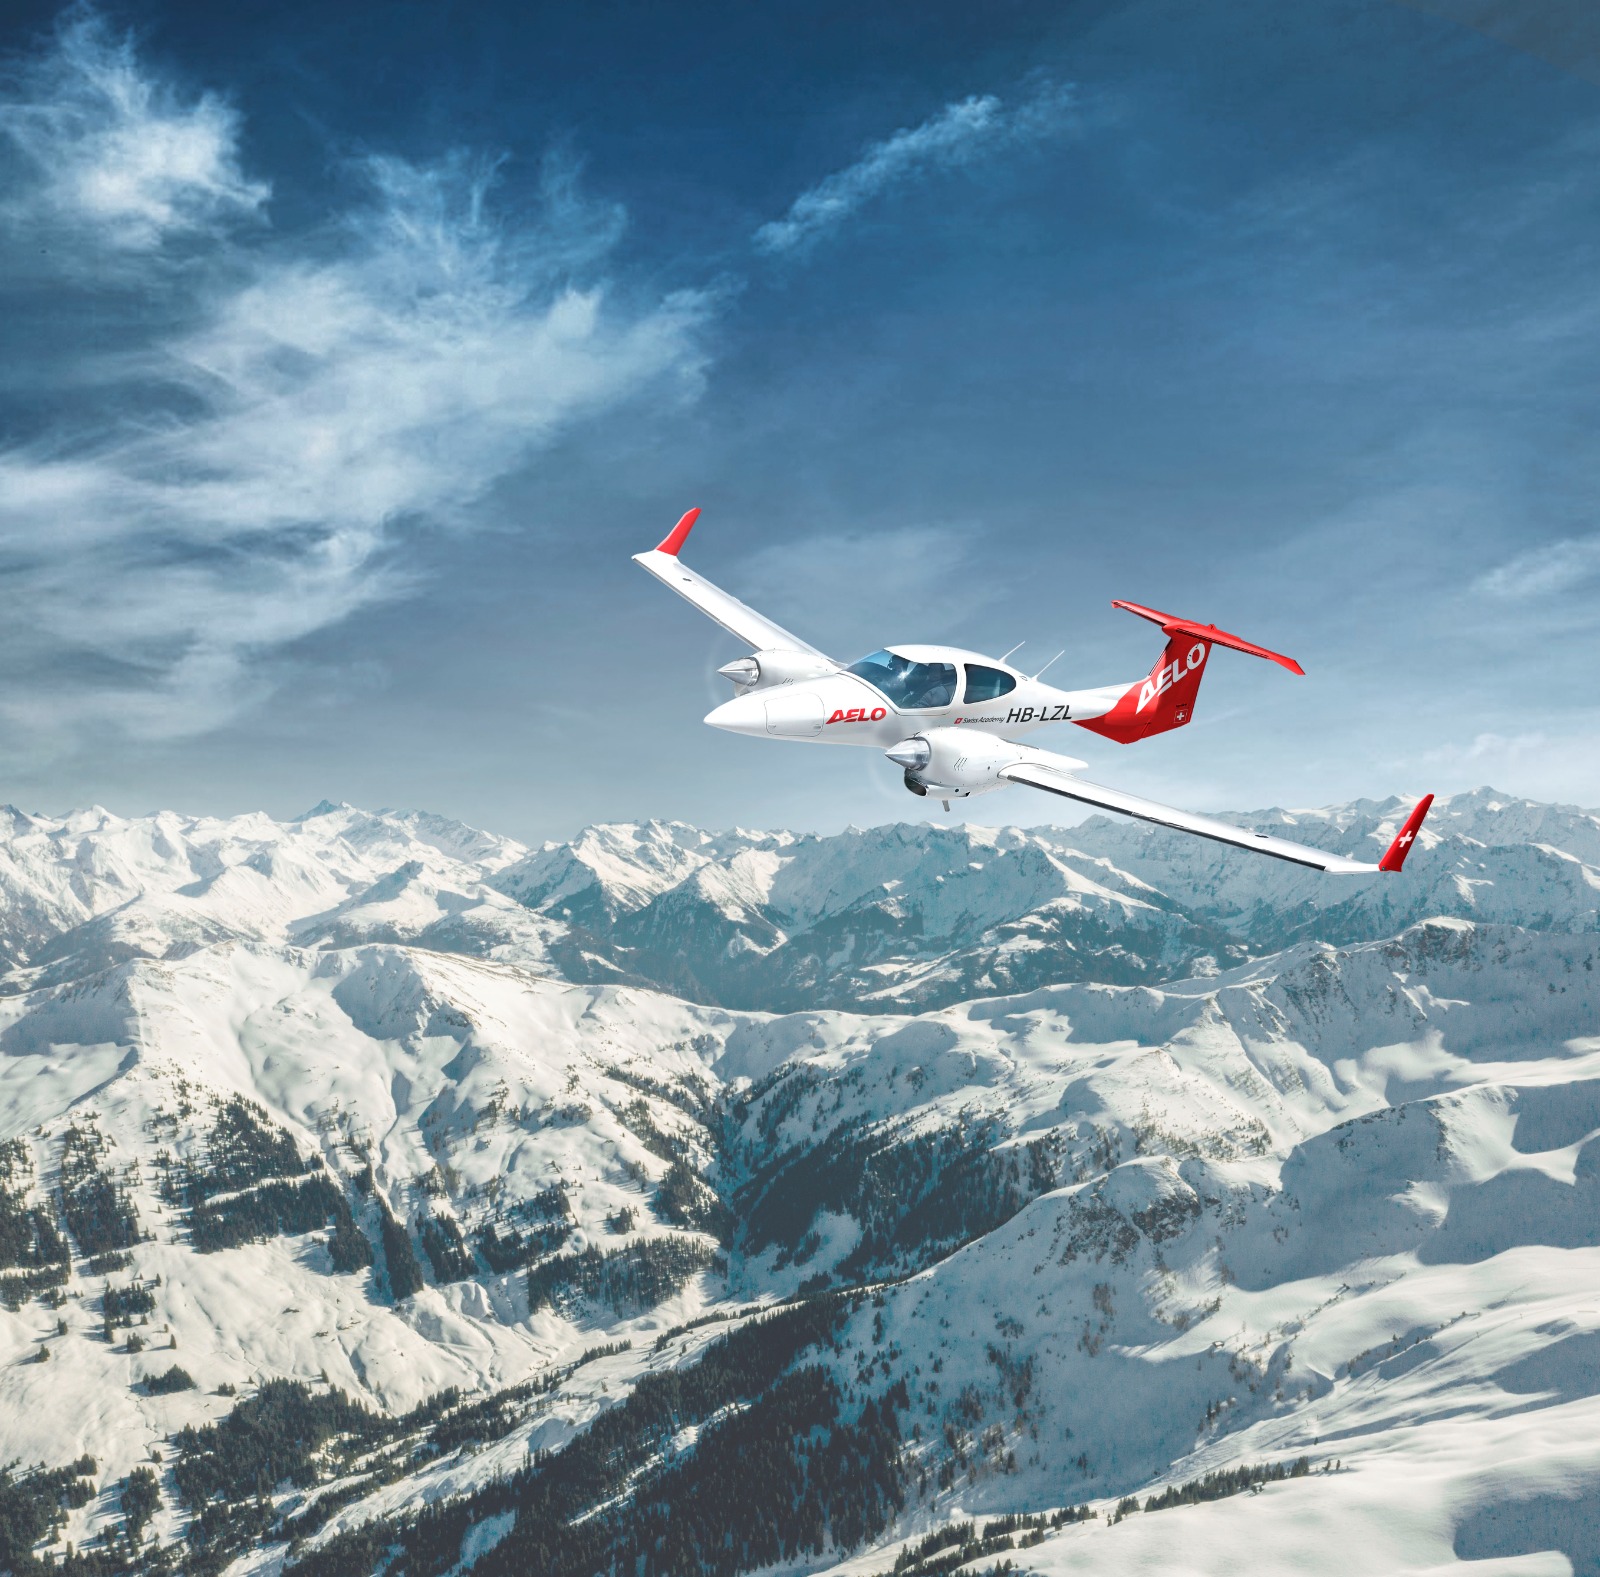 AELO Swiss Academy - Pilot Training AFM.aero